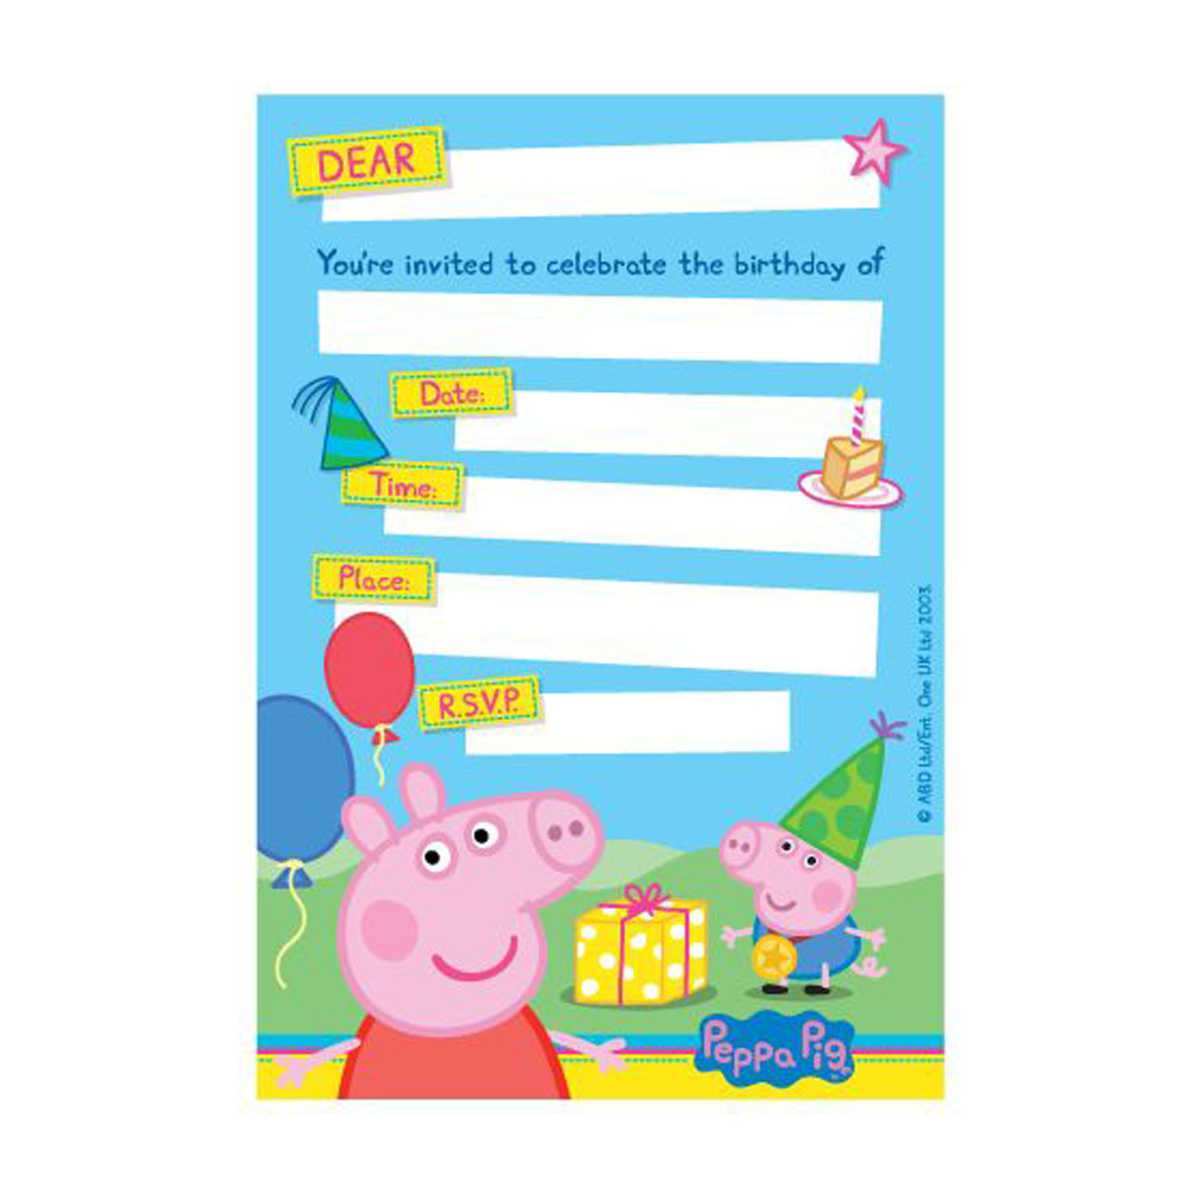 42 Customize Birthday Card Maker Online Free Printable in Photoshop with Birthday Card Maker Online Free Printable